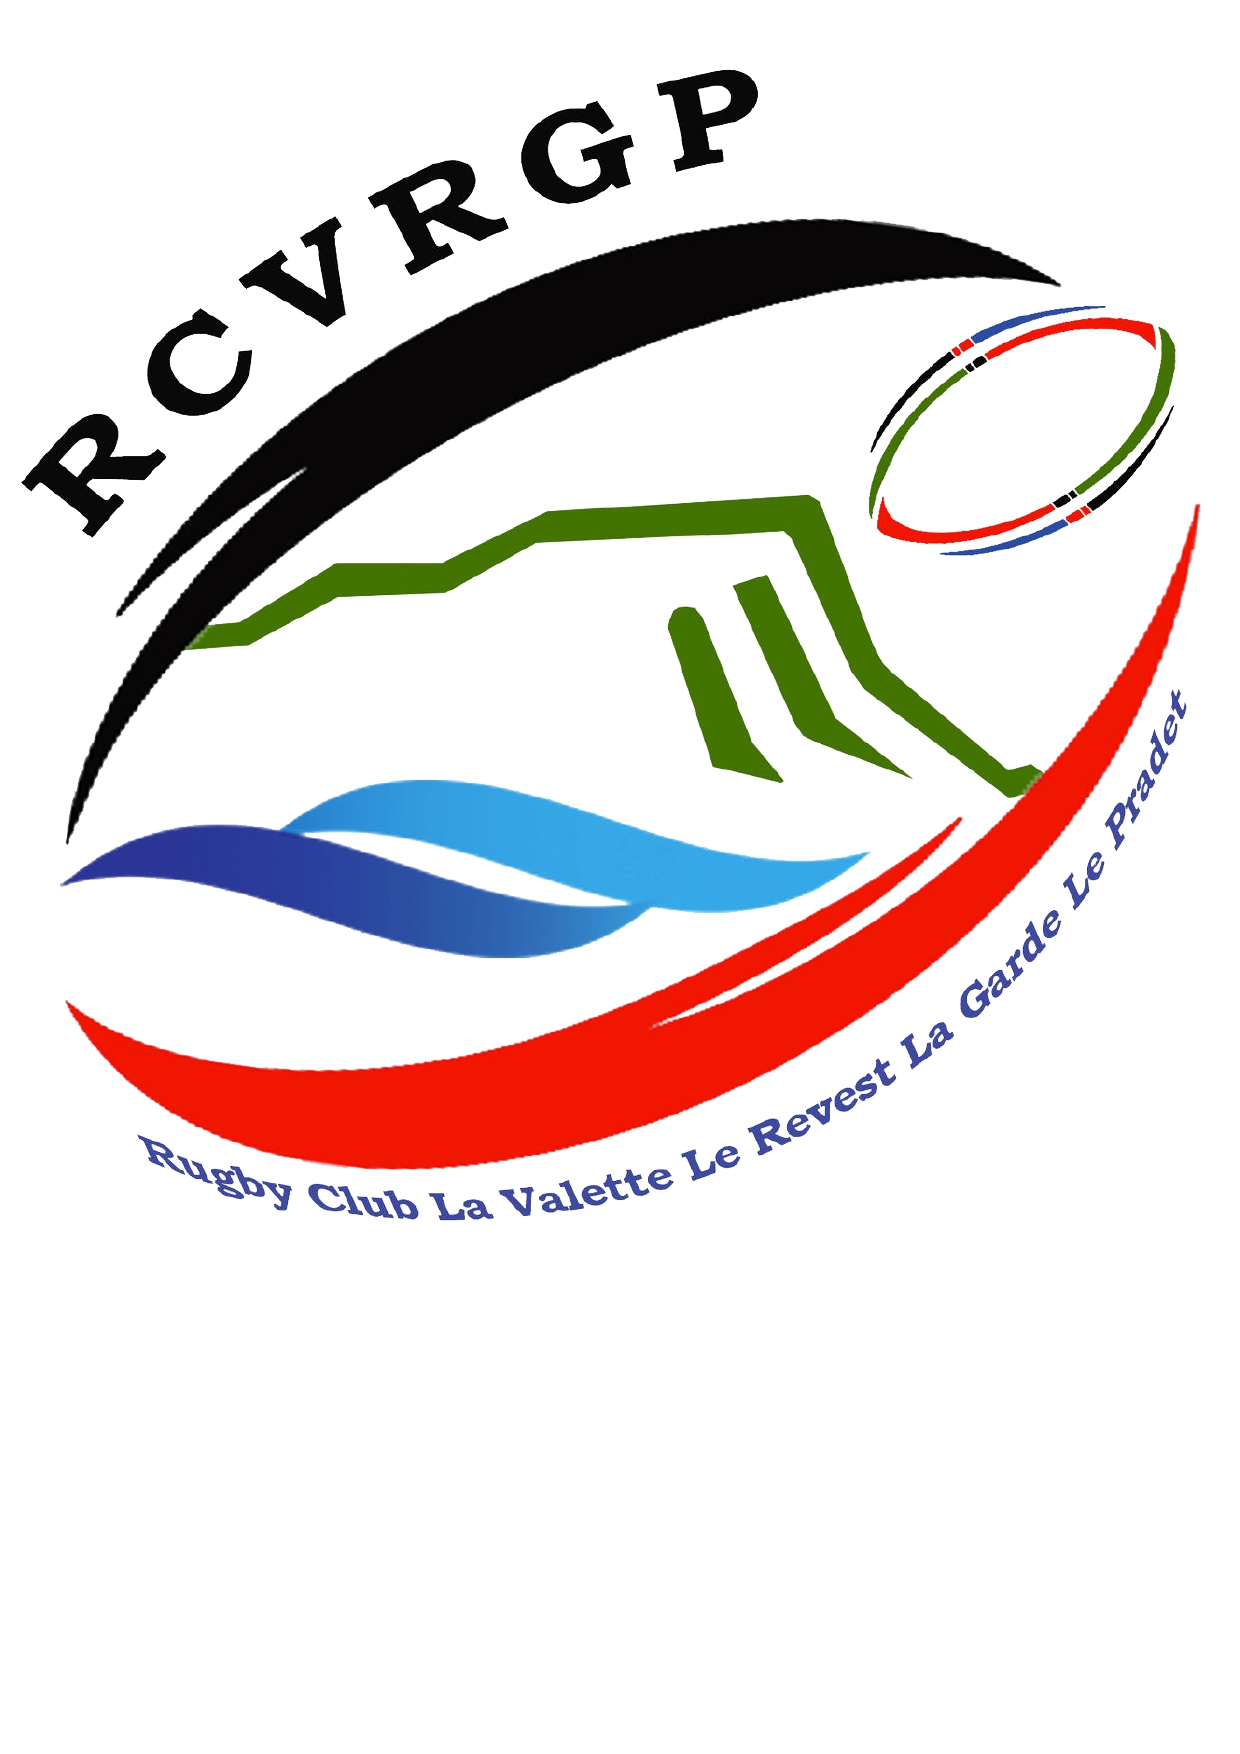 rugby-club-la-valette-logo-page-0001-621367397ff5e687728668.jpg